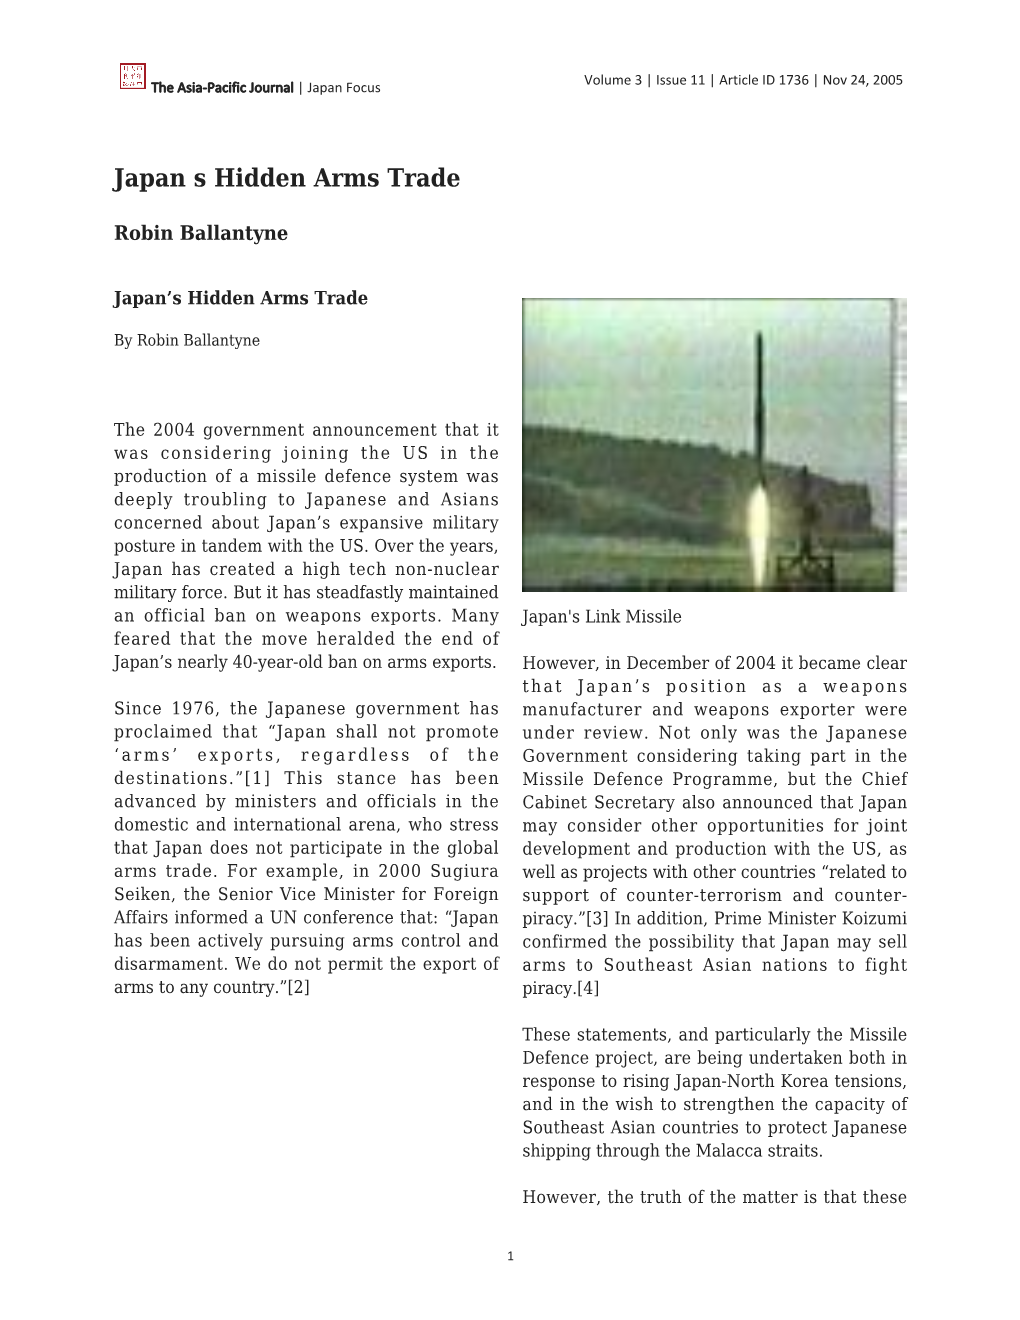 Japan S Hidden Arms Trade